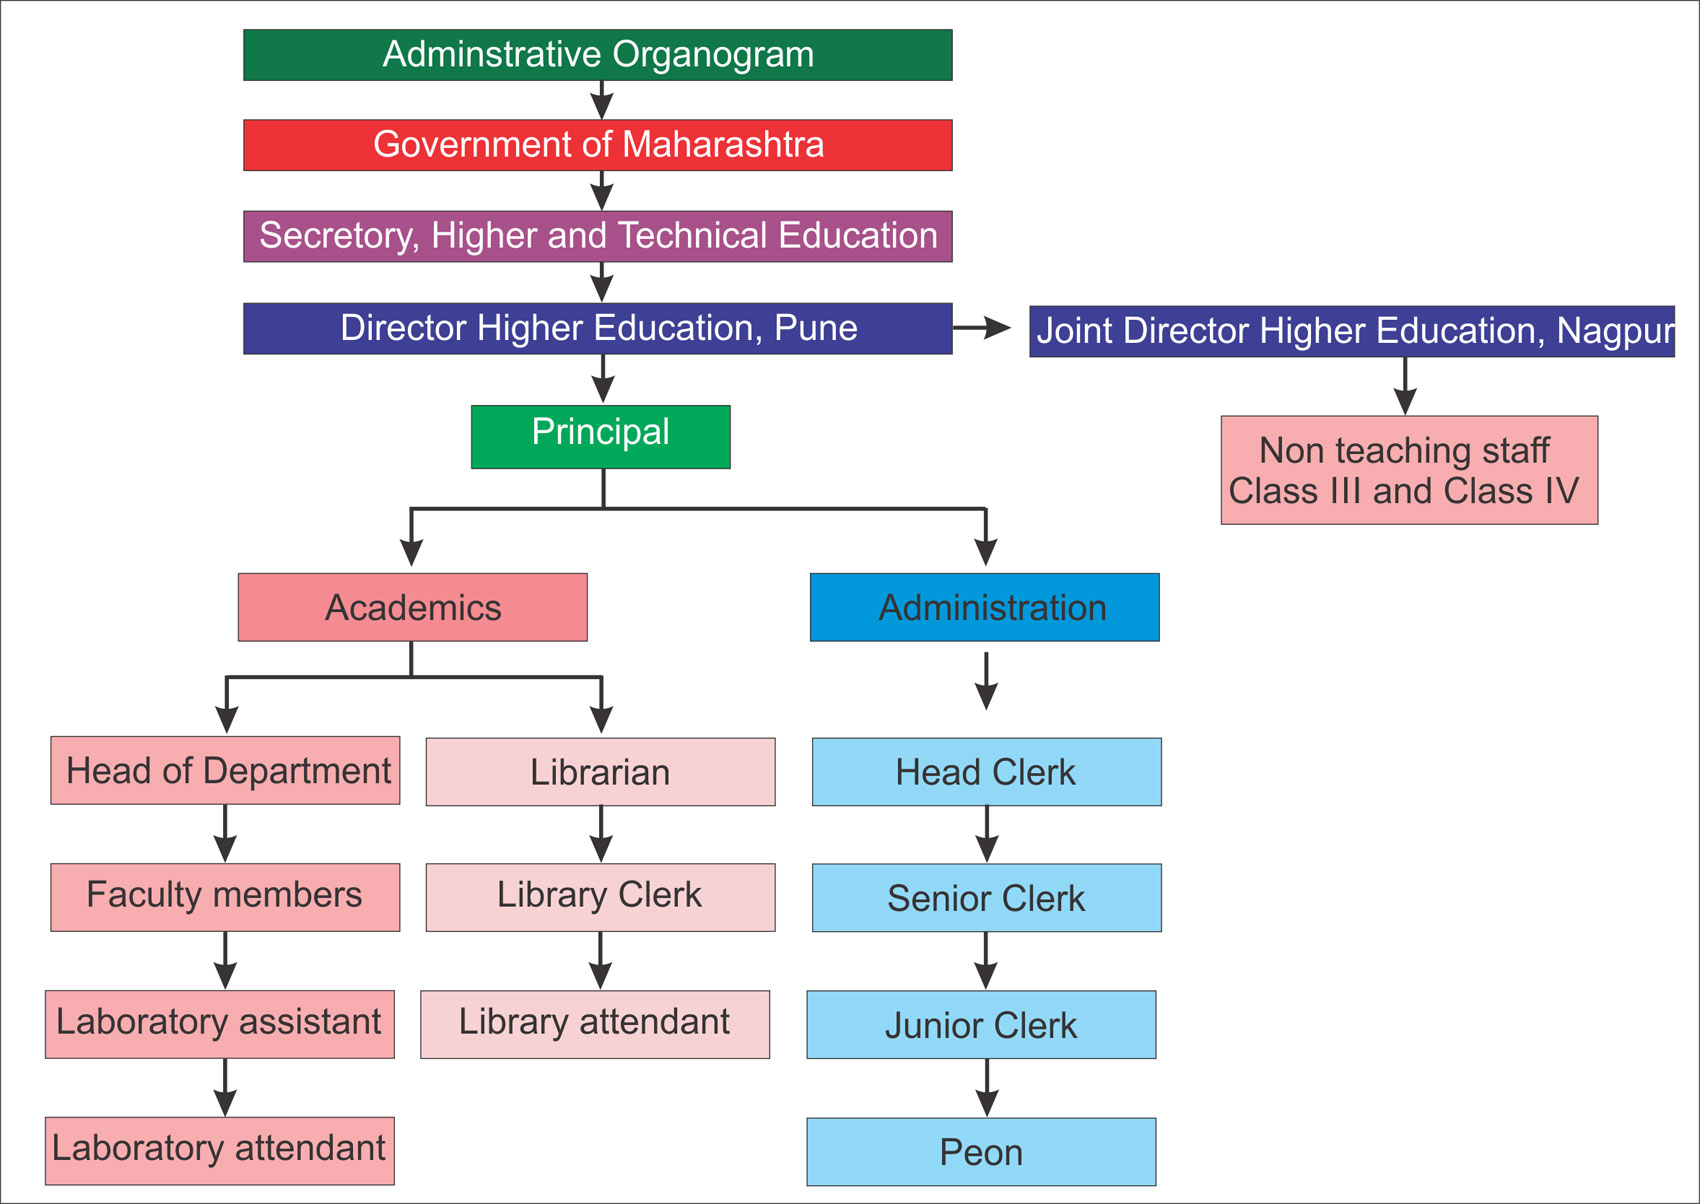 Administrative Organogram